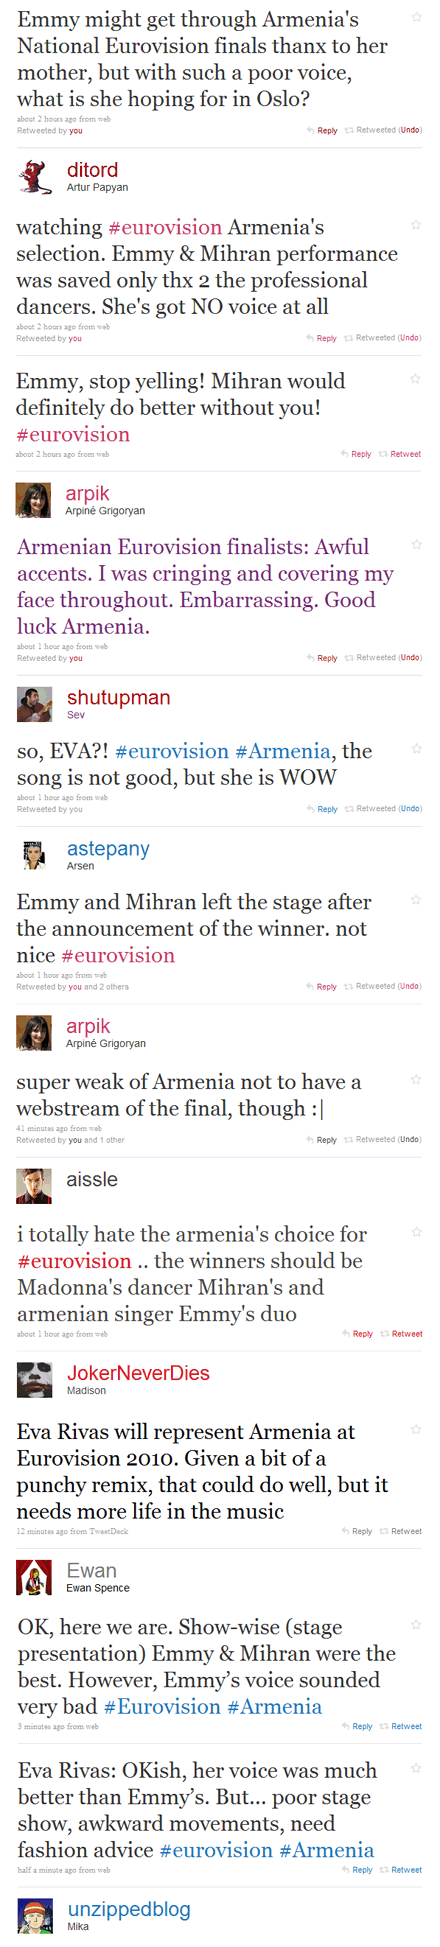 eurovision_tweet_0002